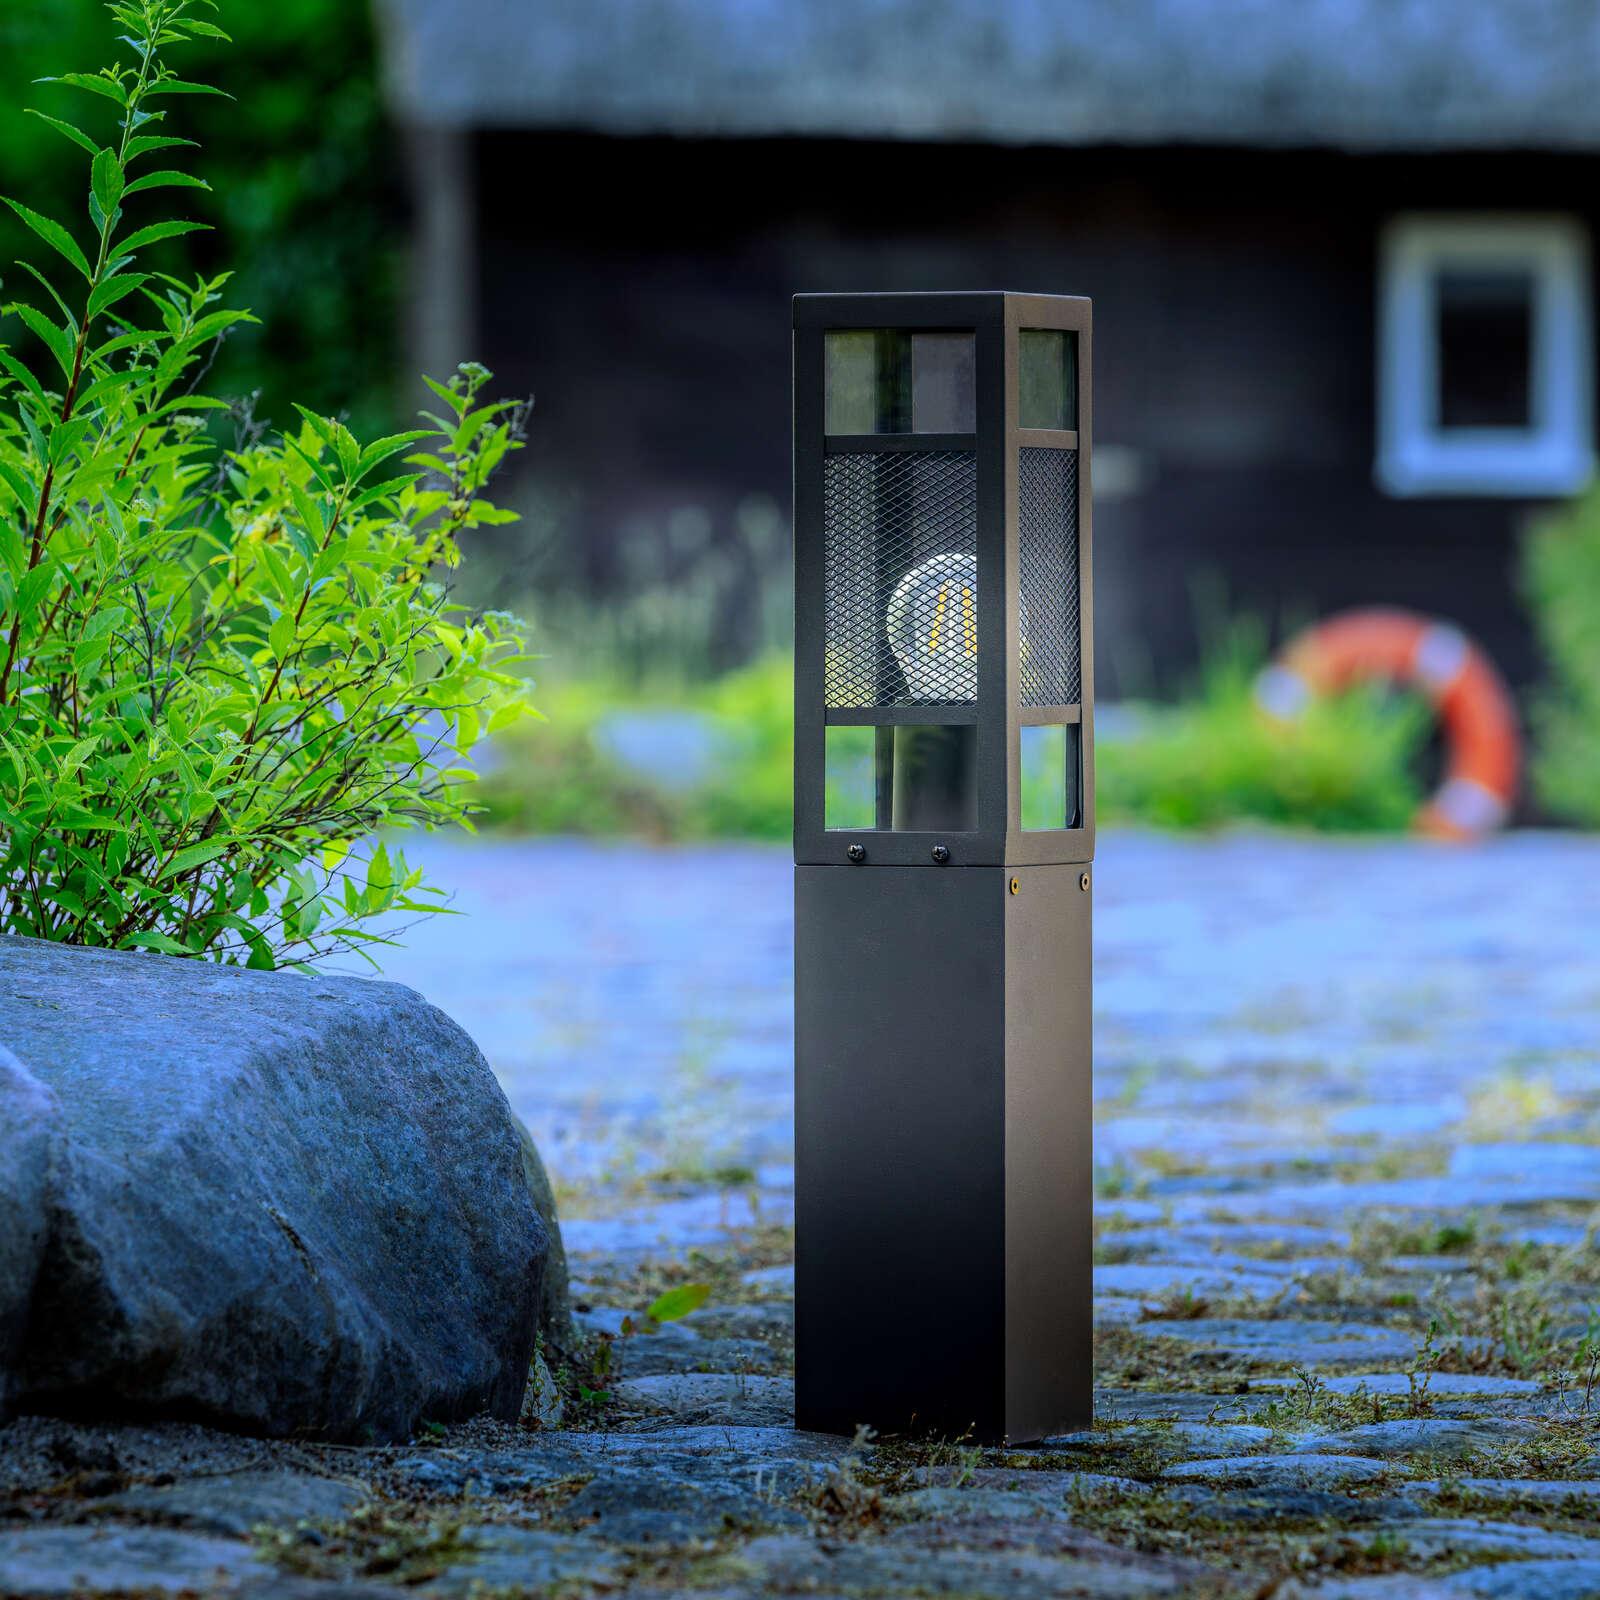             Outdoor metal plinth light - Hendrik - Black
        